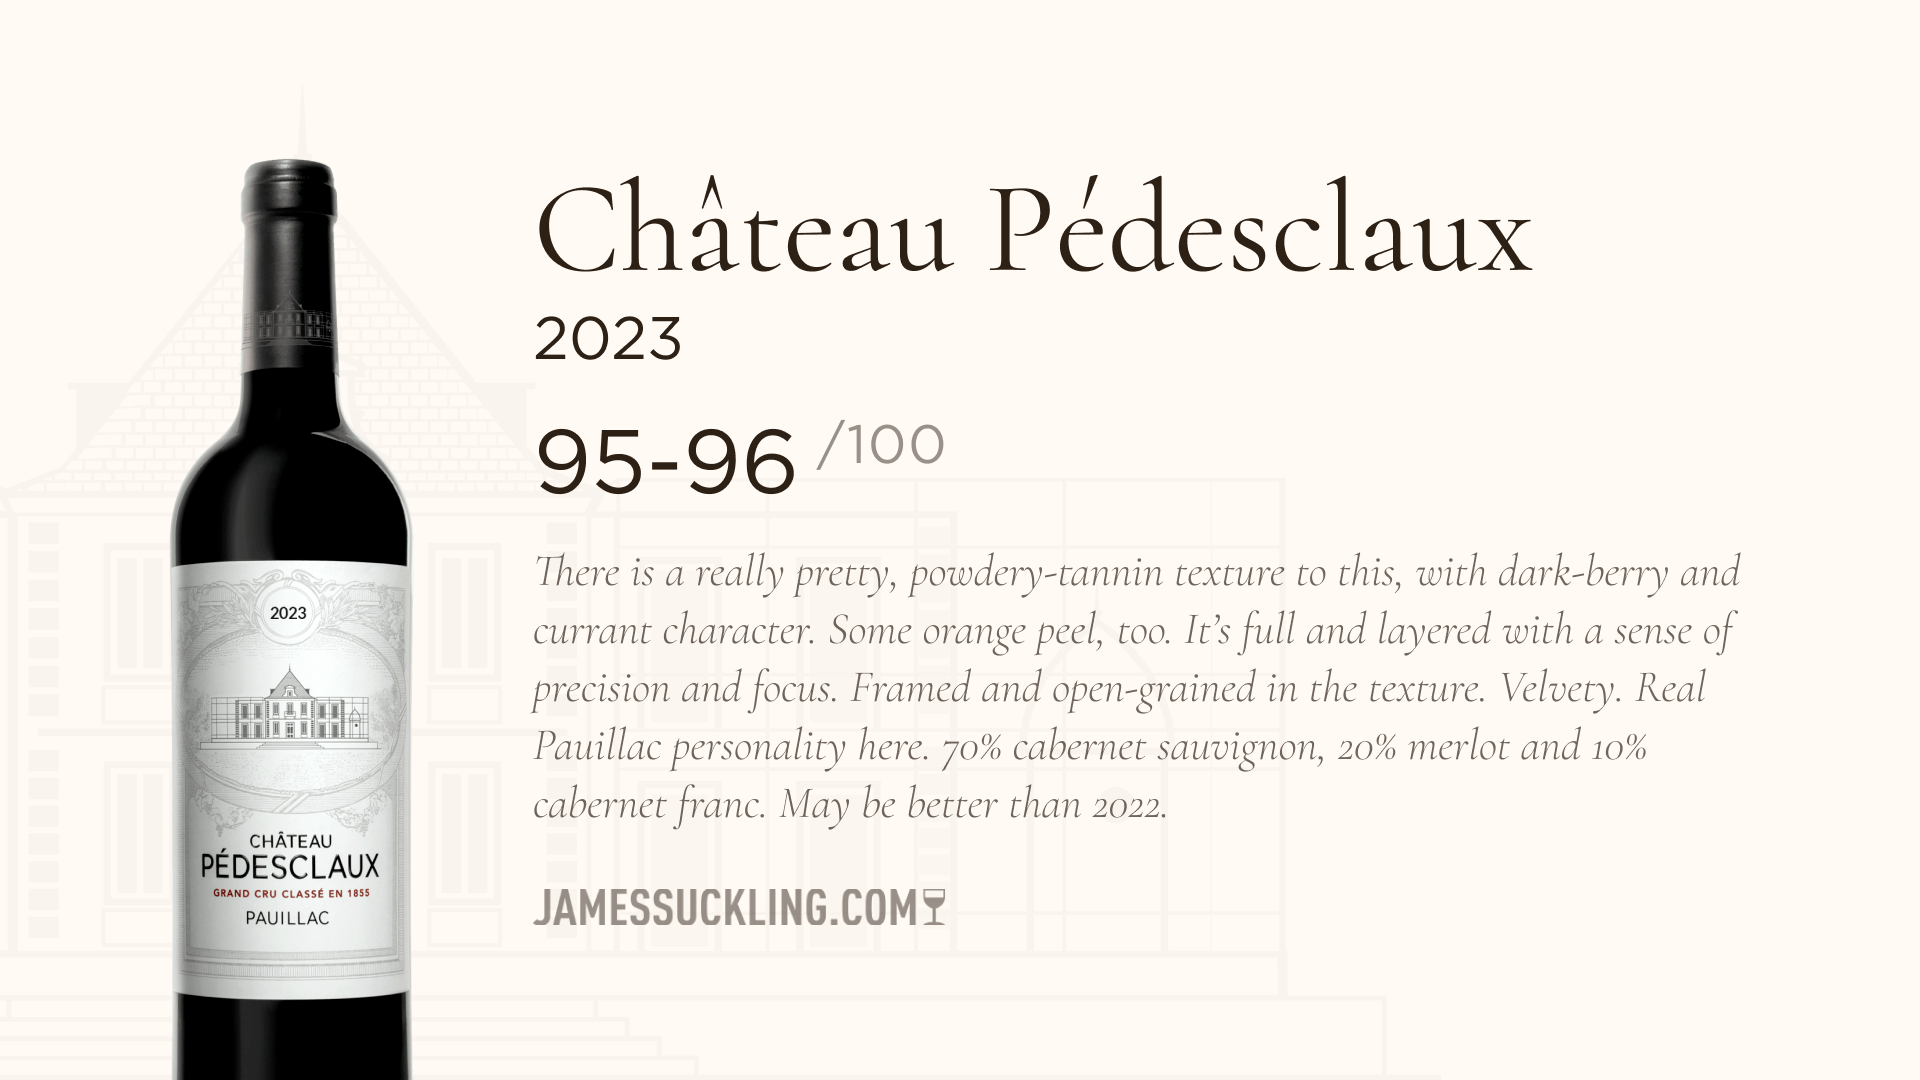 2023 is now available - Chateau Pedesclaux